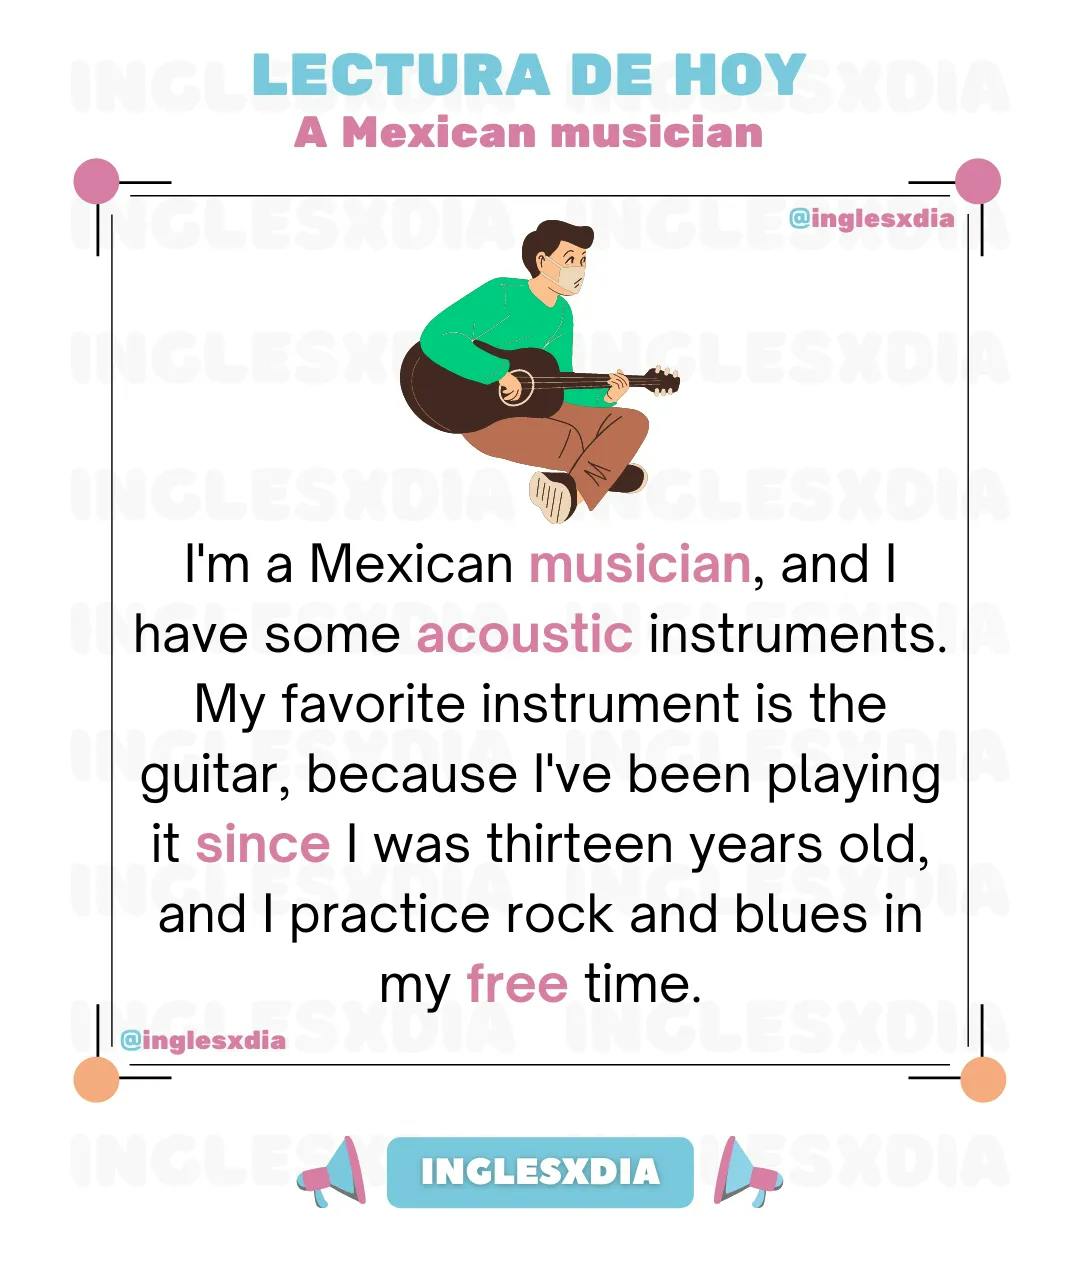 A Mexican musician